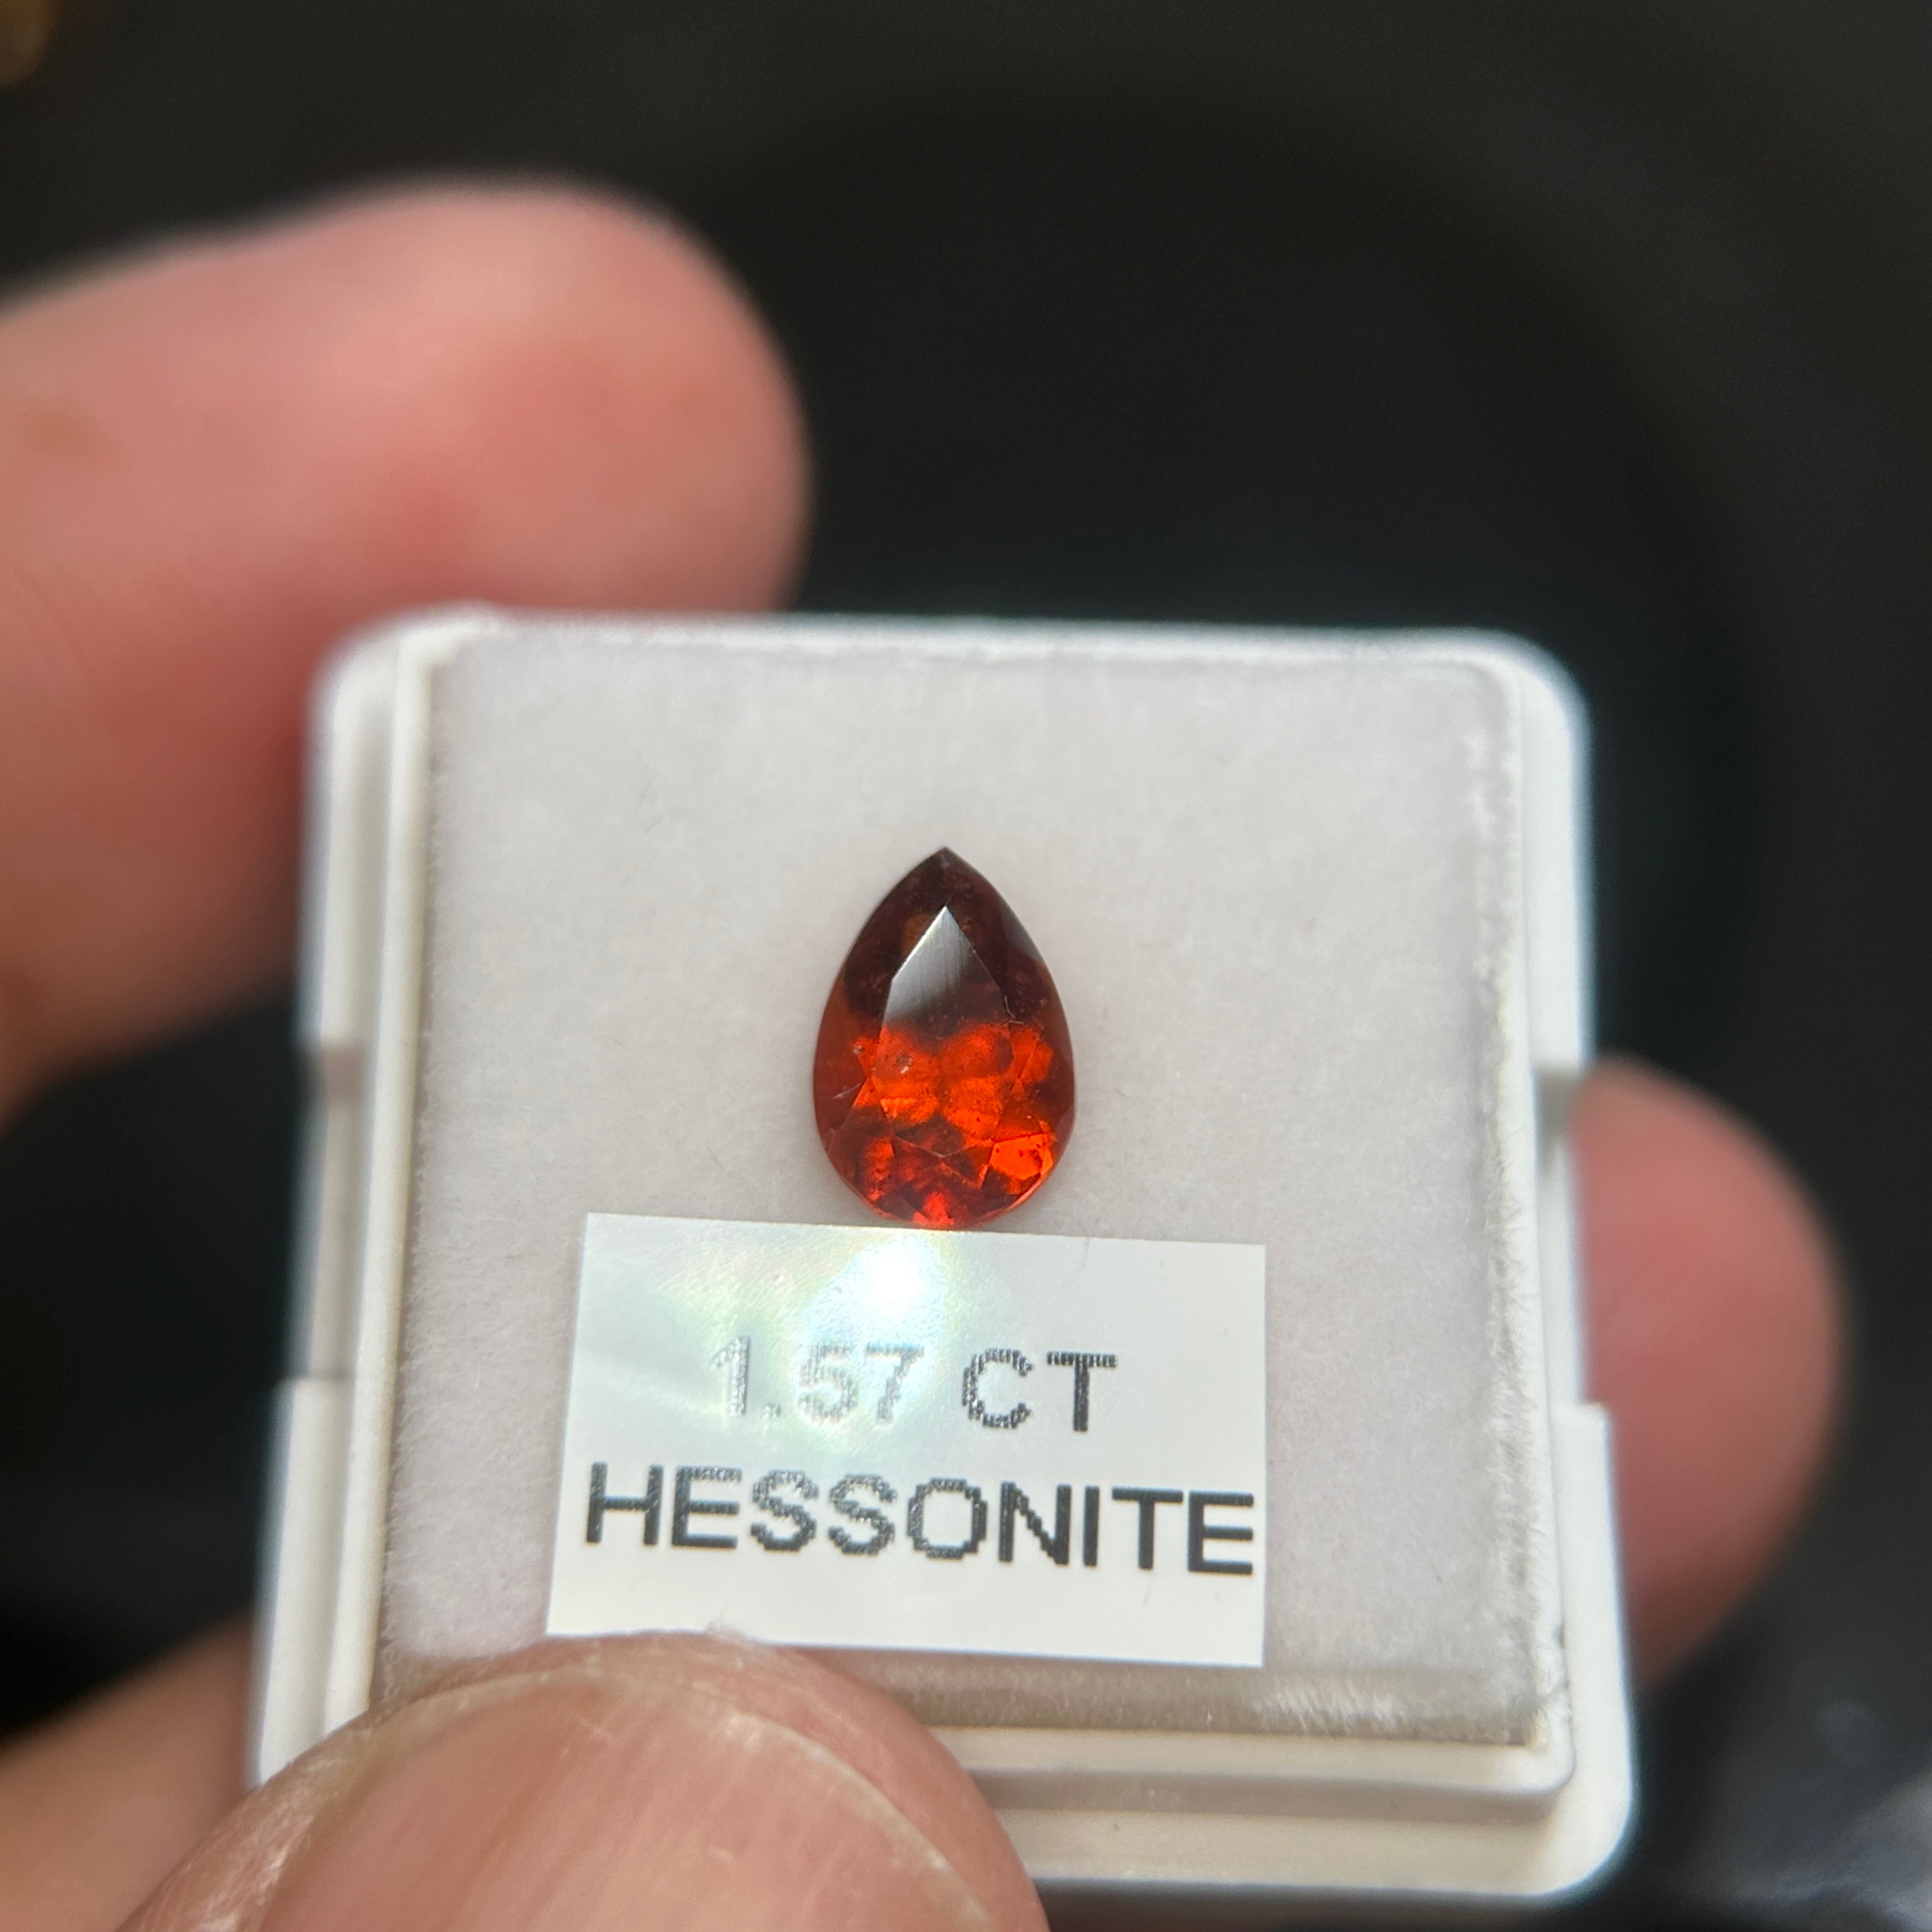 1.57ct Hessonite, Tanzania, Untreated Unheated